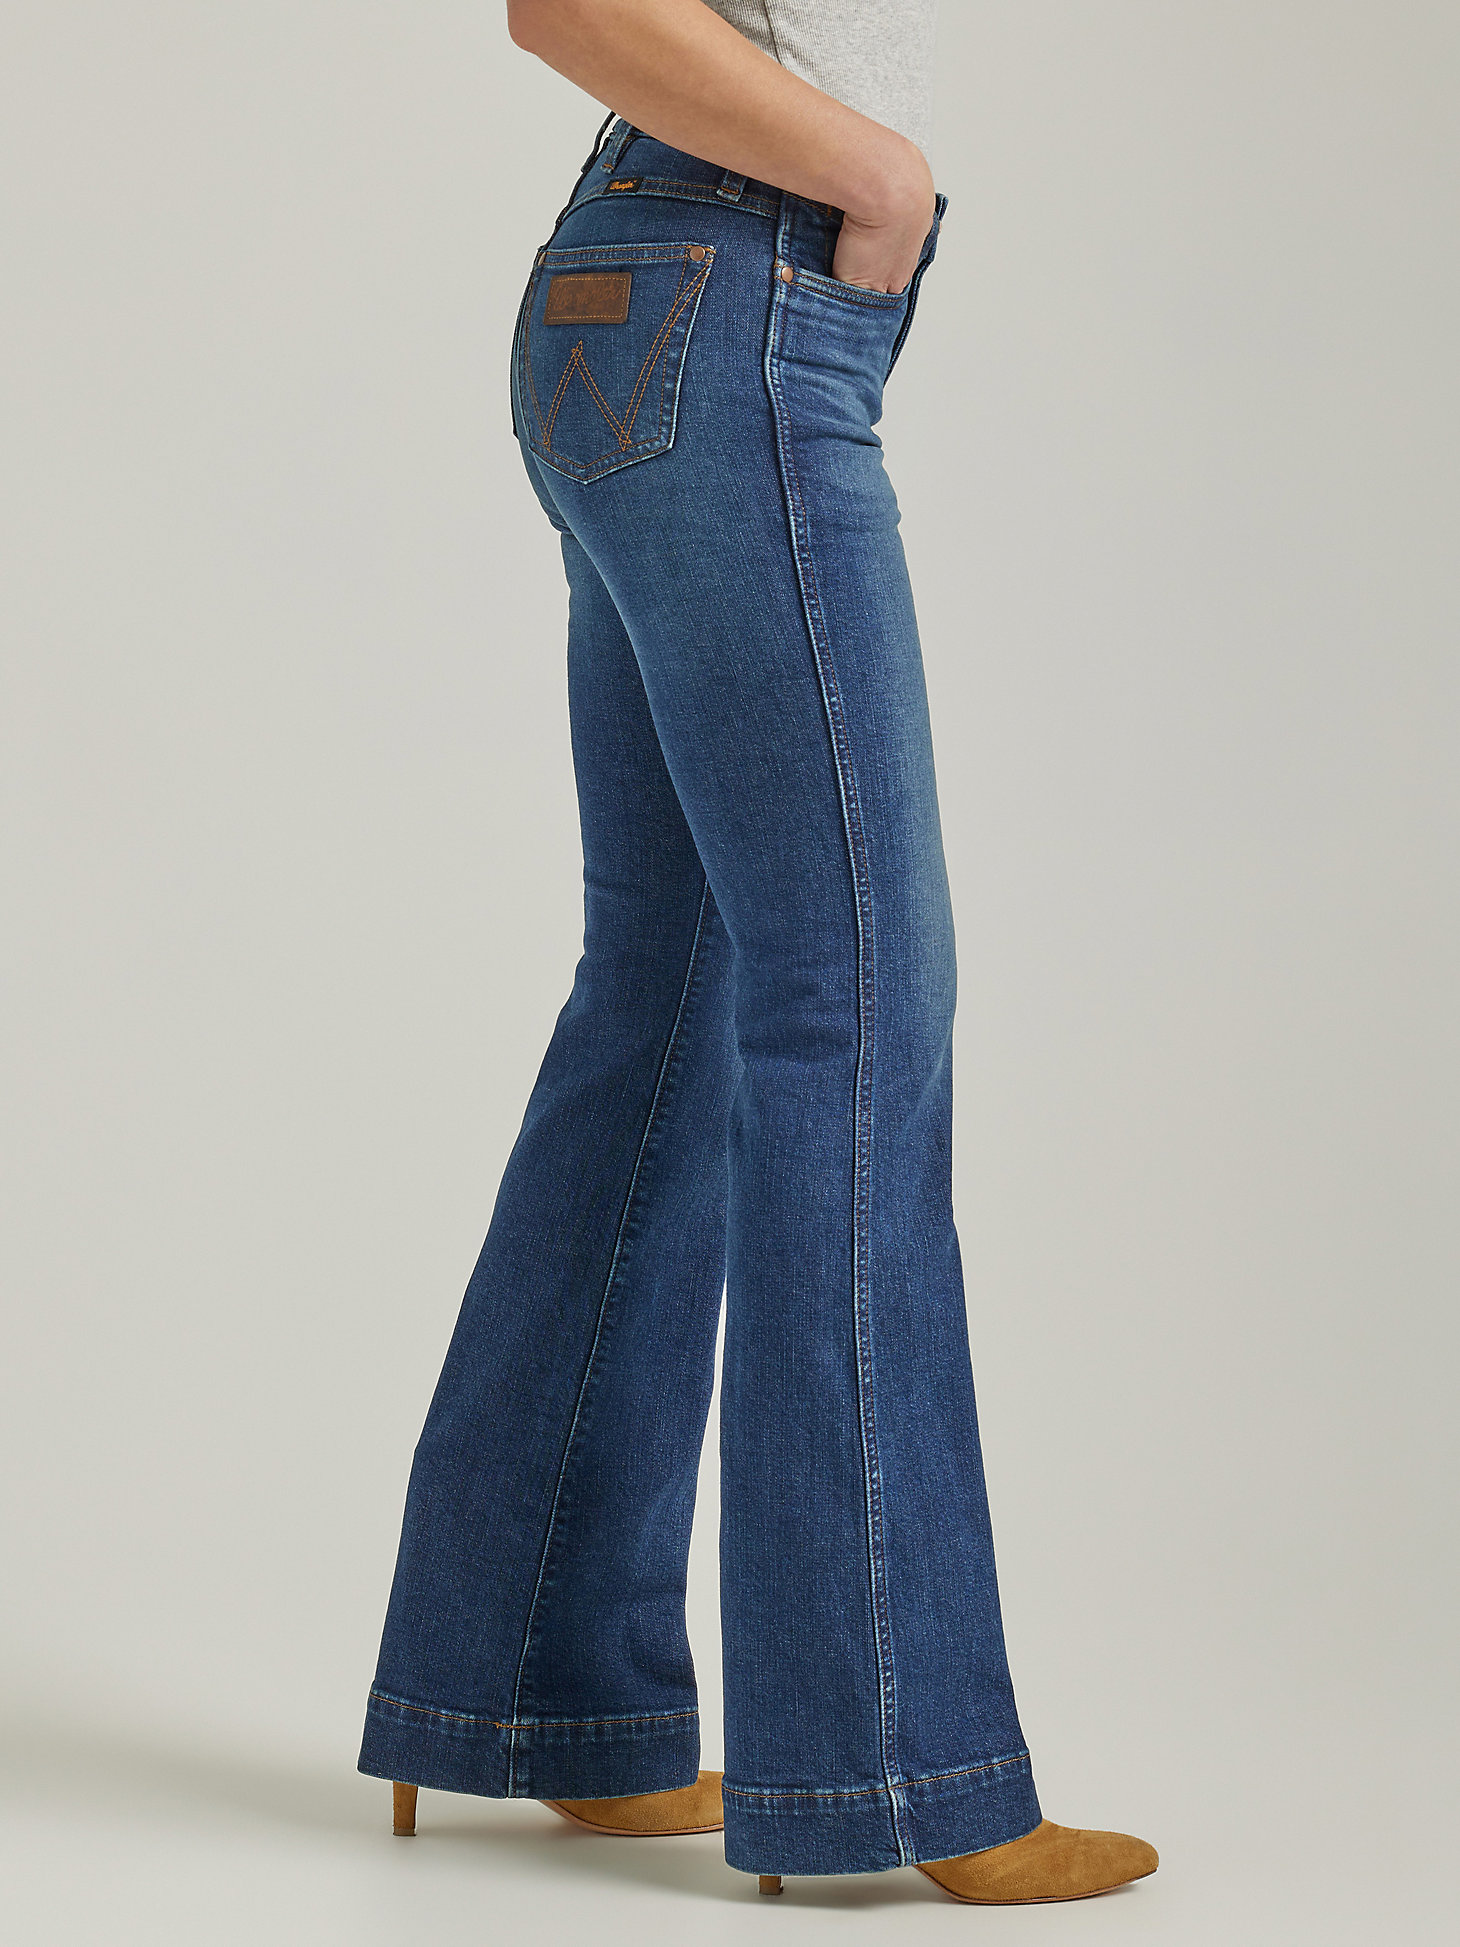 Women's Wrangler Retro® Premium High Rise Trouser Jean in Gabriella alternative view 2